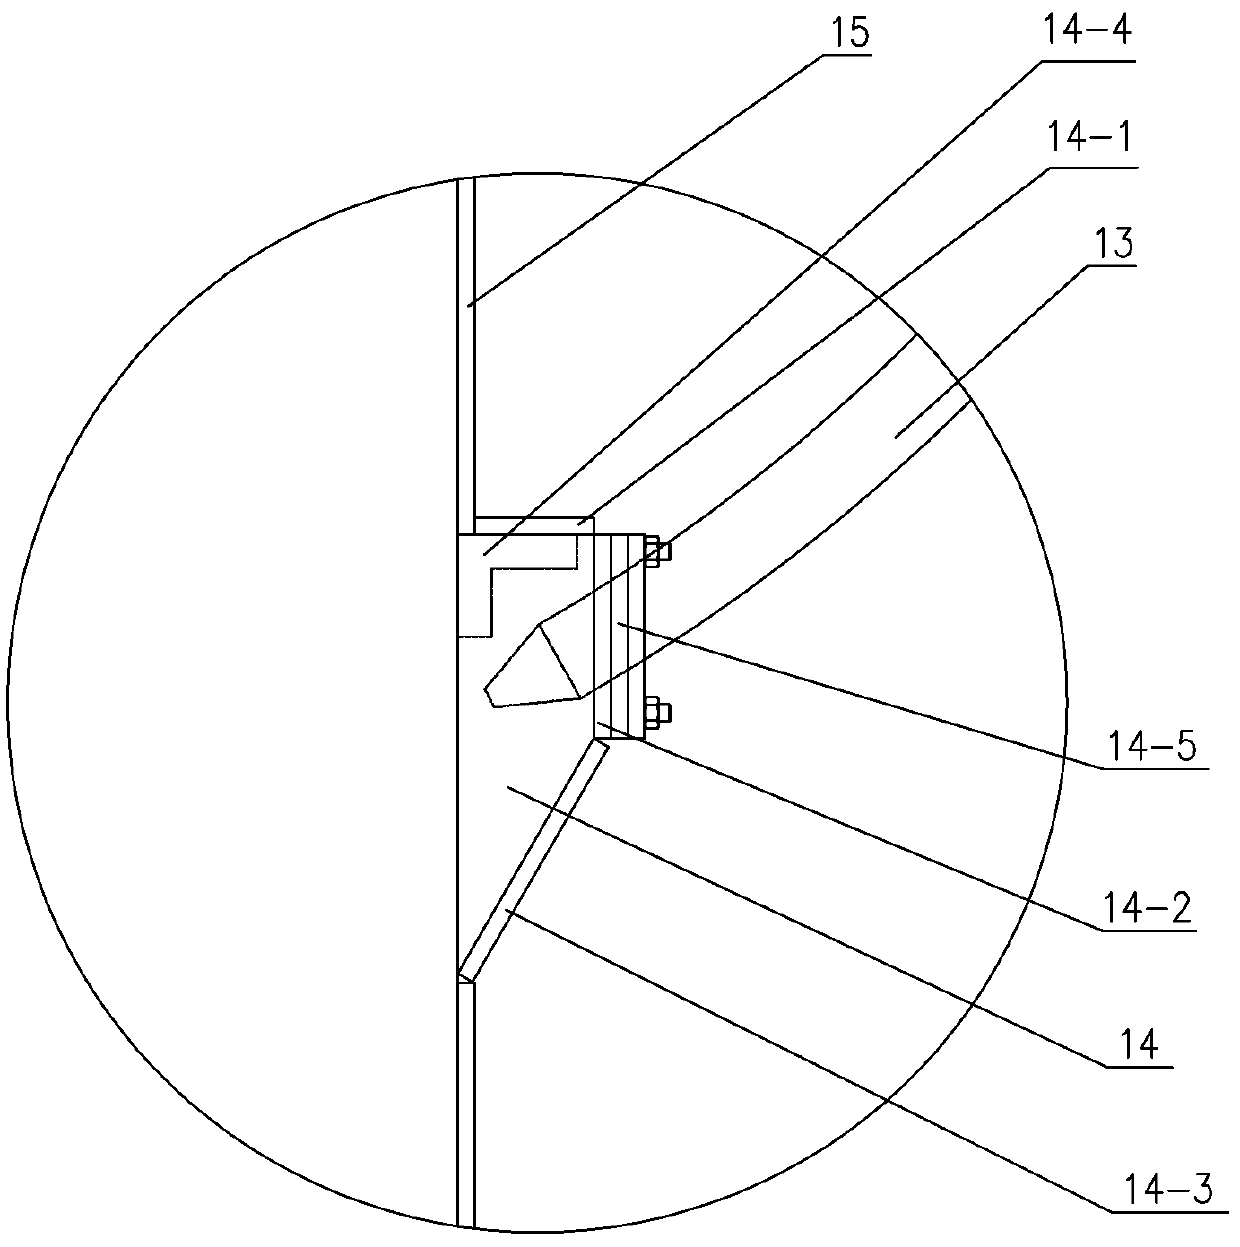 Vertical drive arc-shaped gate bar valve device of chute